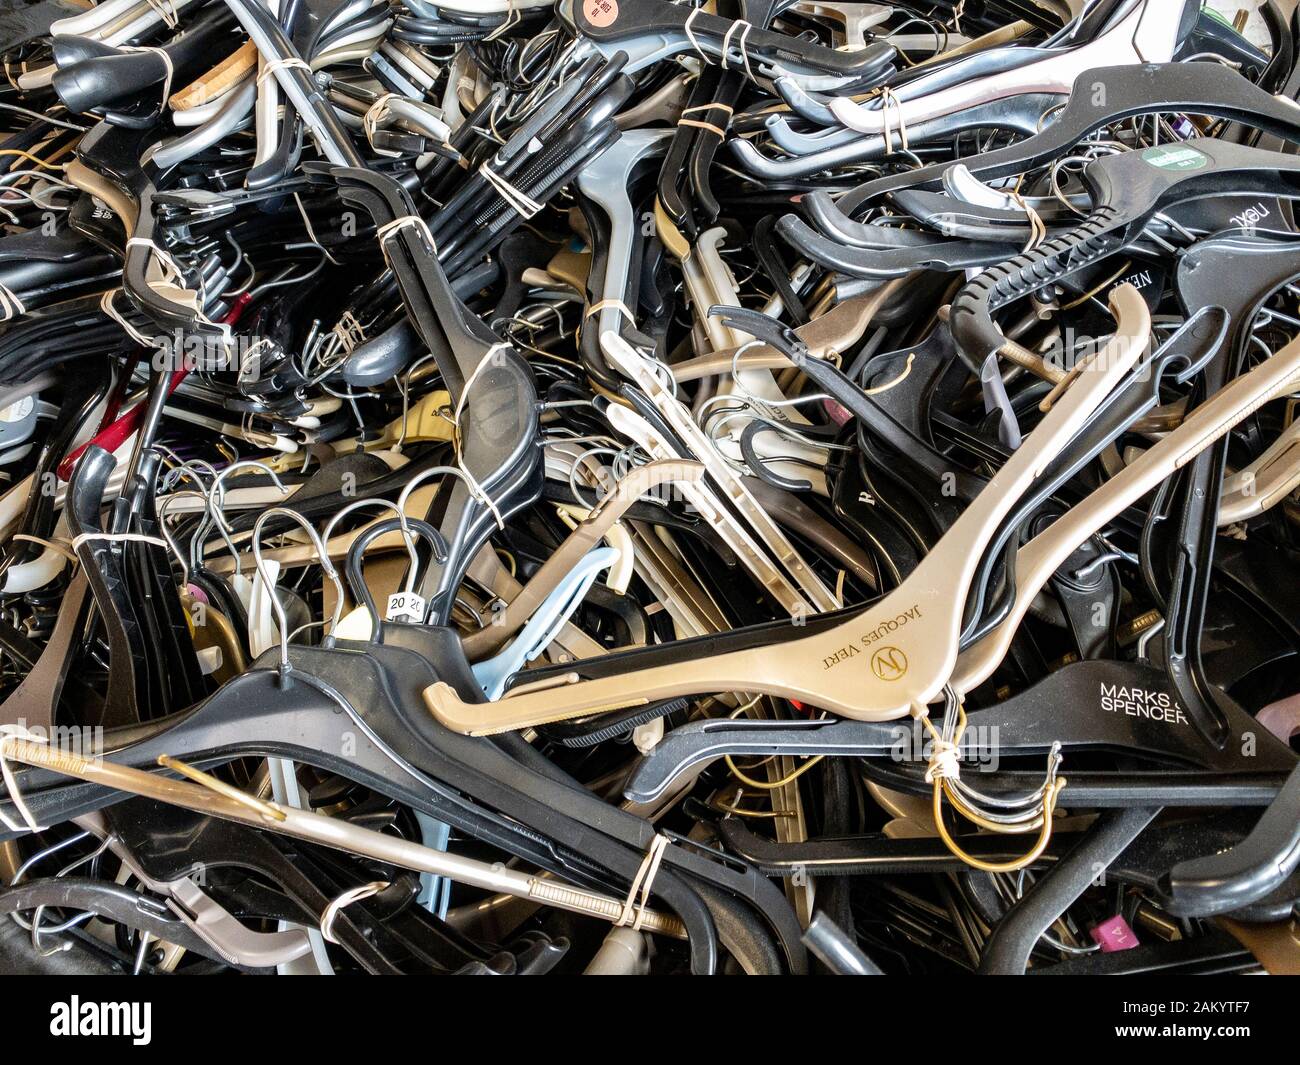 Piles of plastic coat hangers in a waste recycling bin, UK Stock Photo -  Alamy